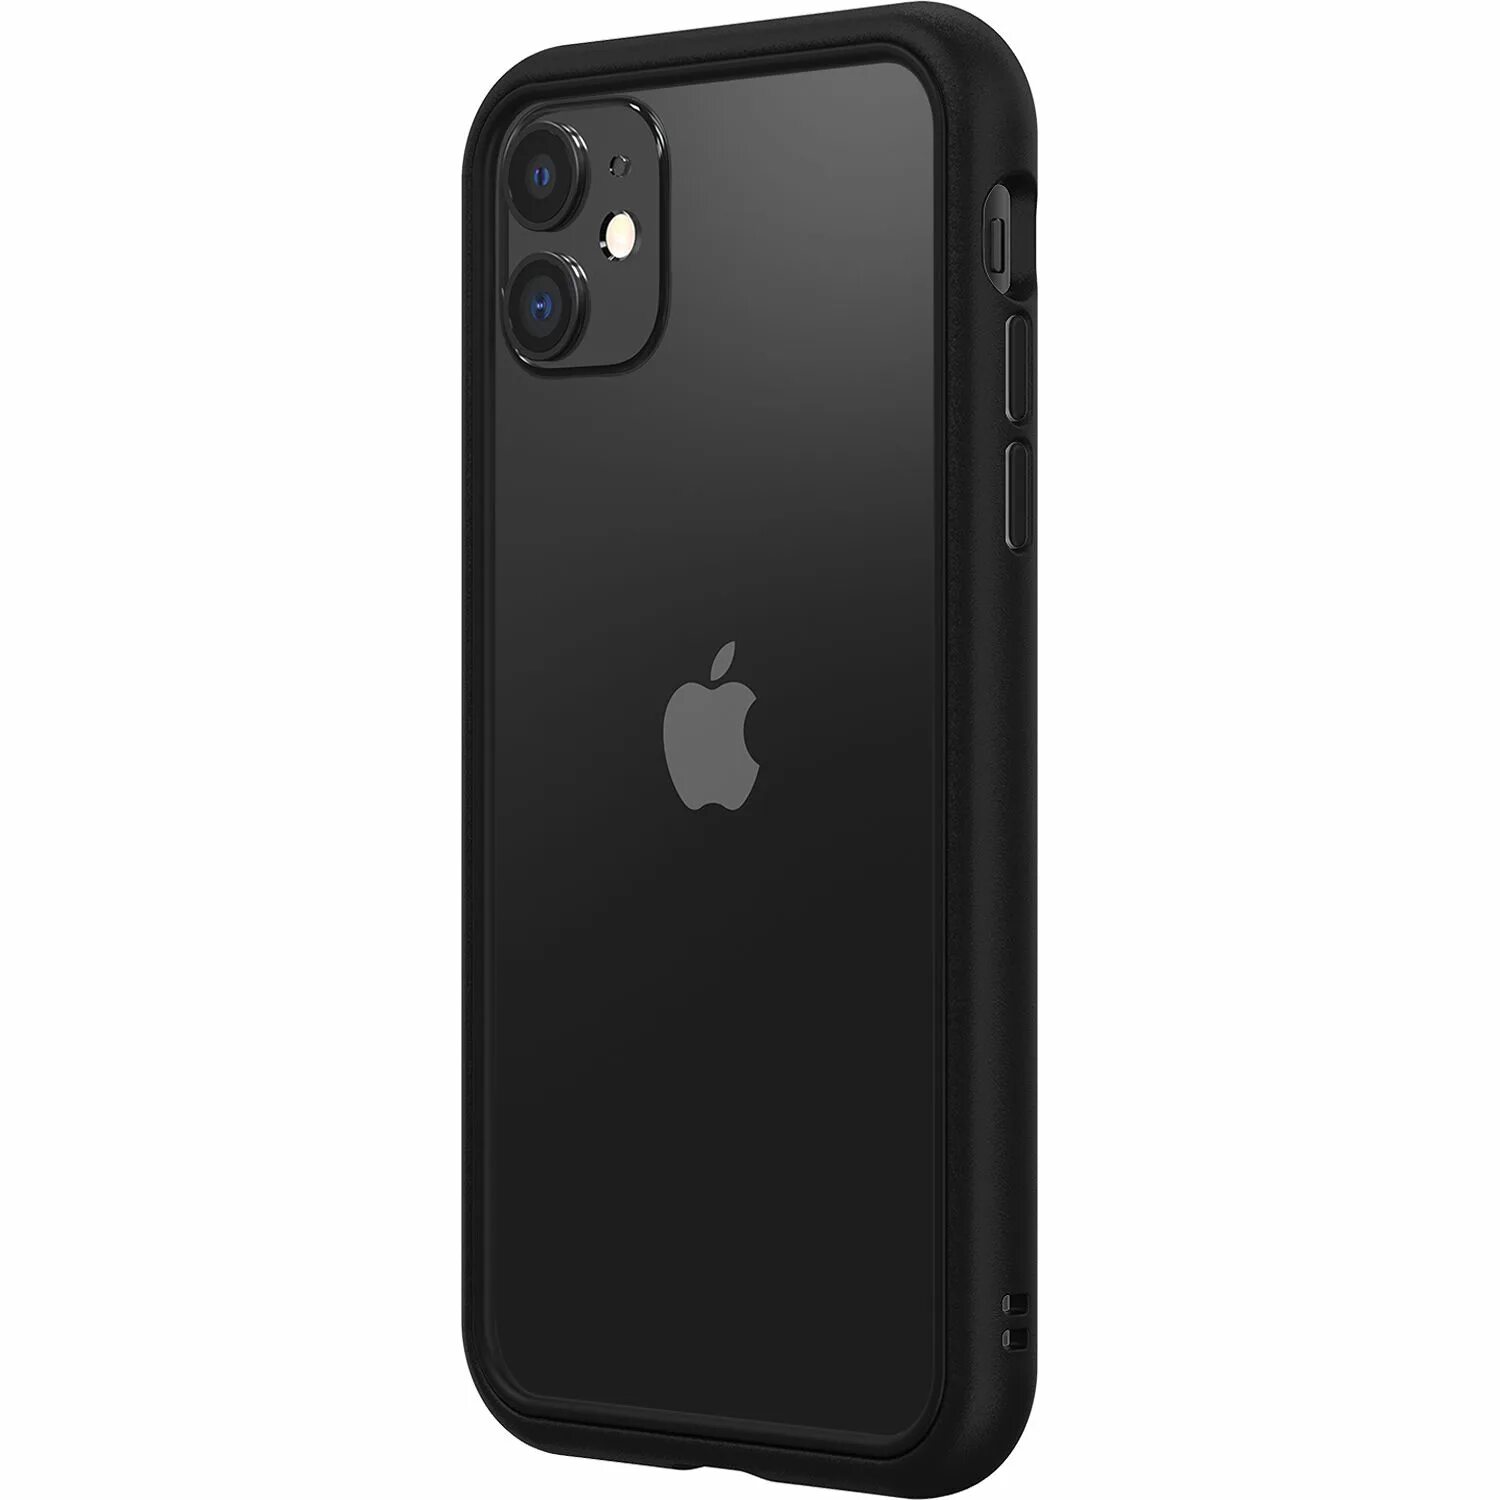 Айфон 11 про черный. Iphone 11 черный. Айфон XR Black in Case. Айфон 11 черный болты. Zagg iphone 11.